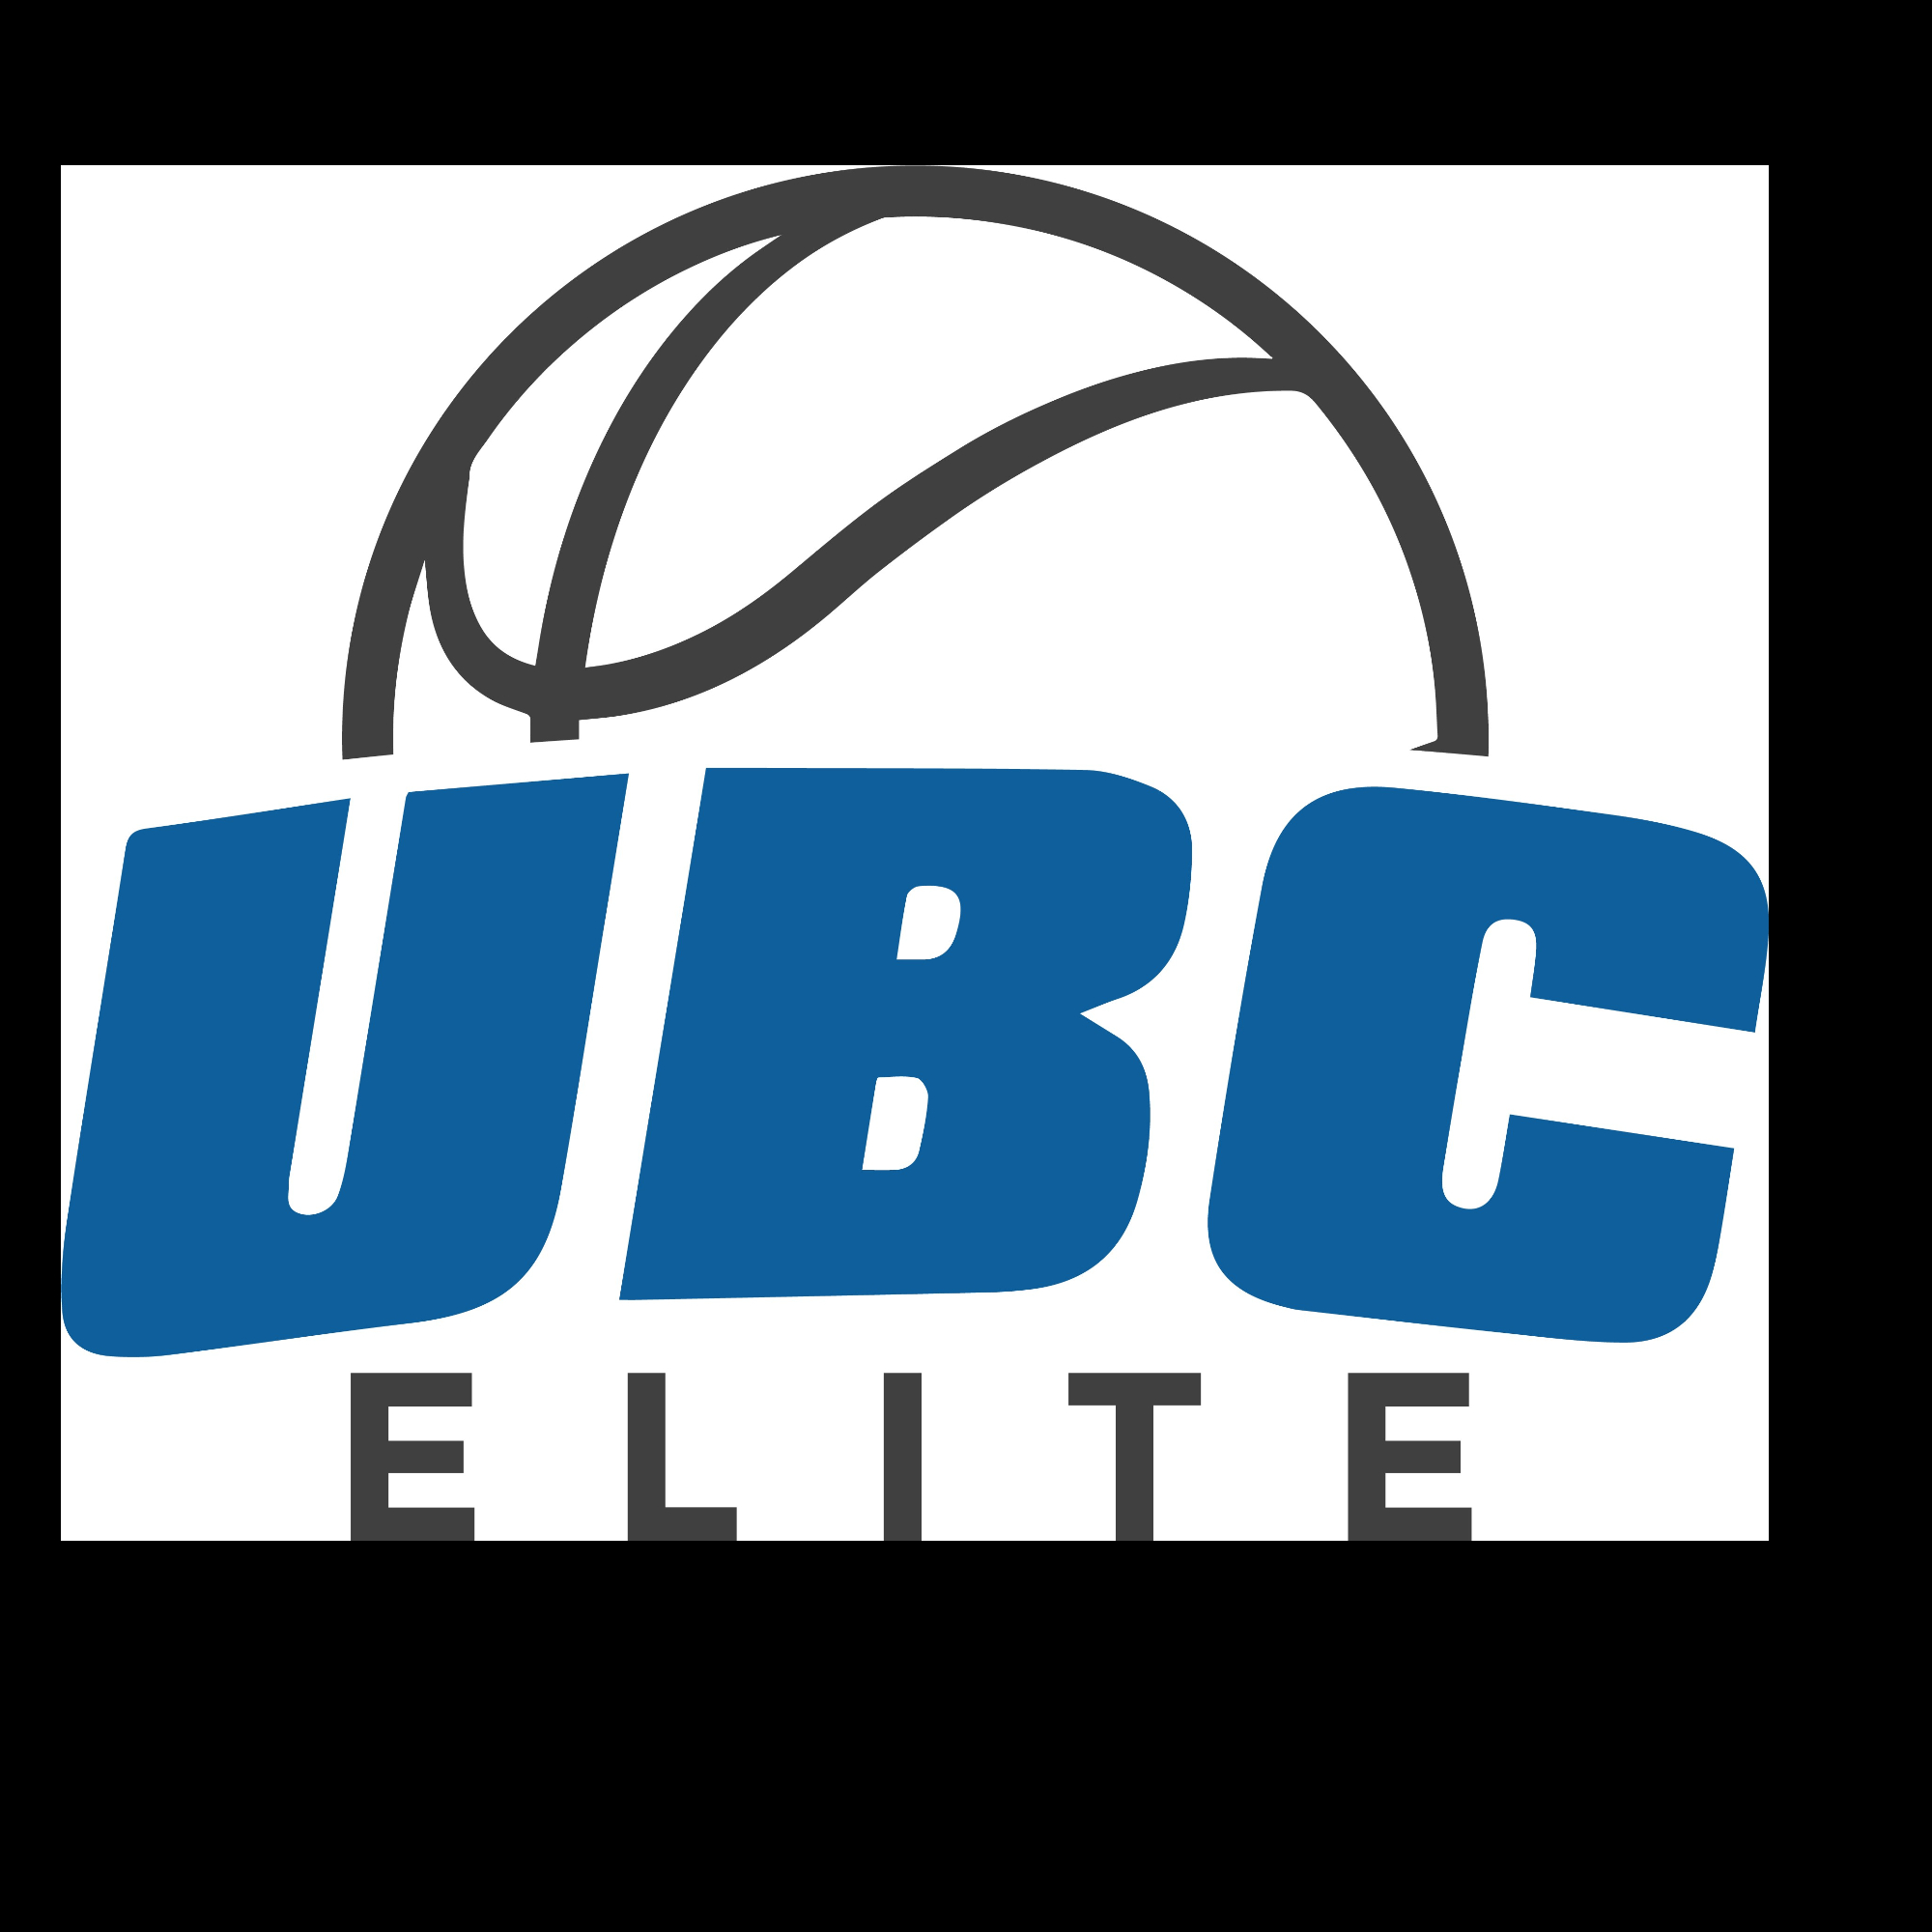 The official logo of Utah Basketball Club